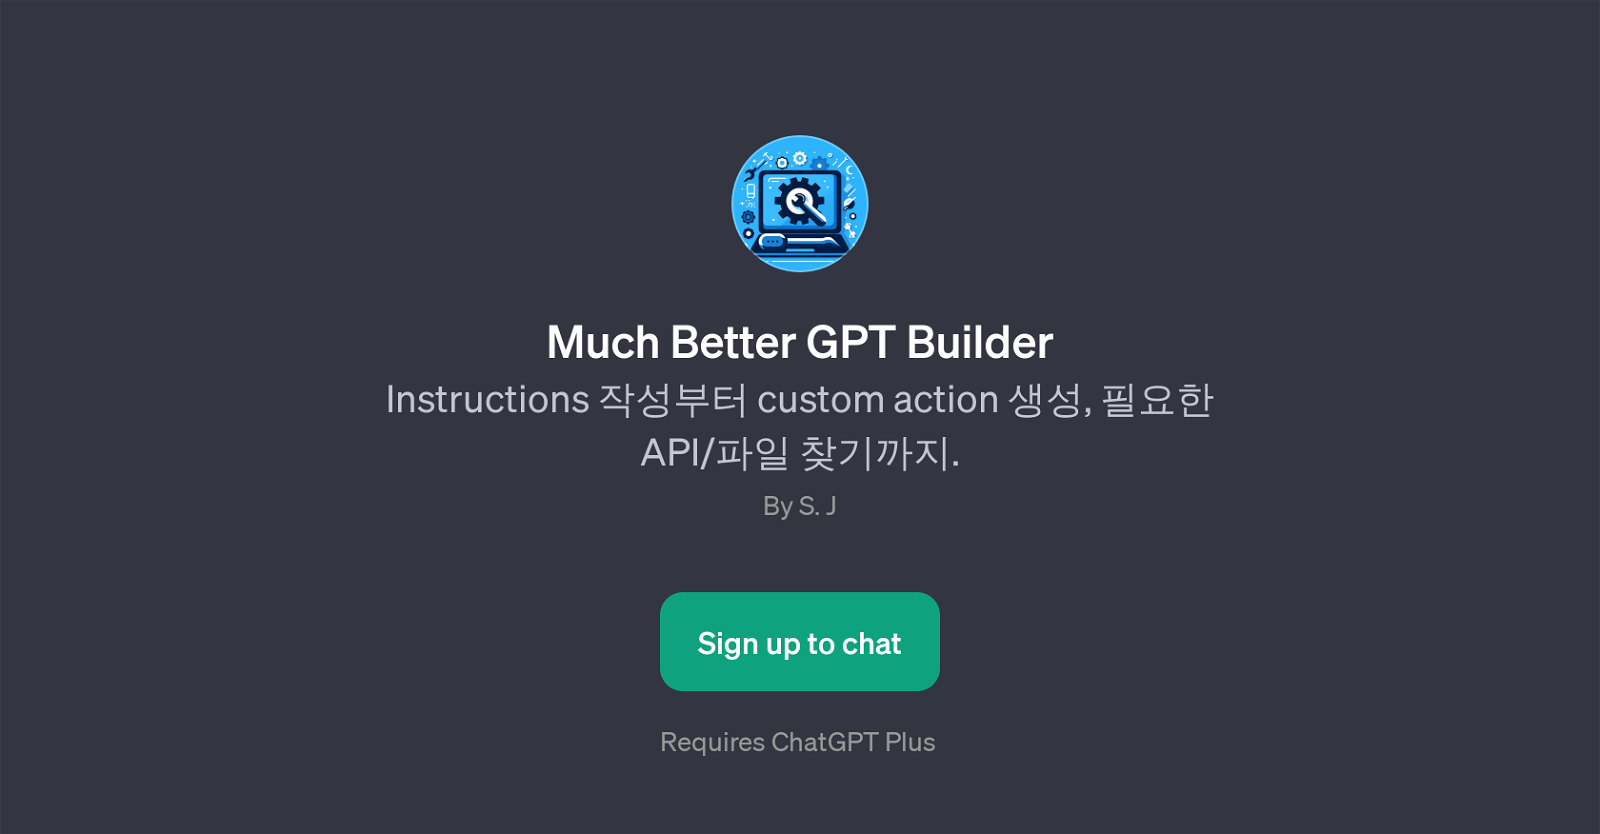 Much Better GPT Builder website